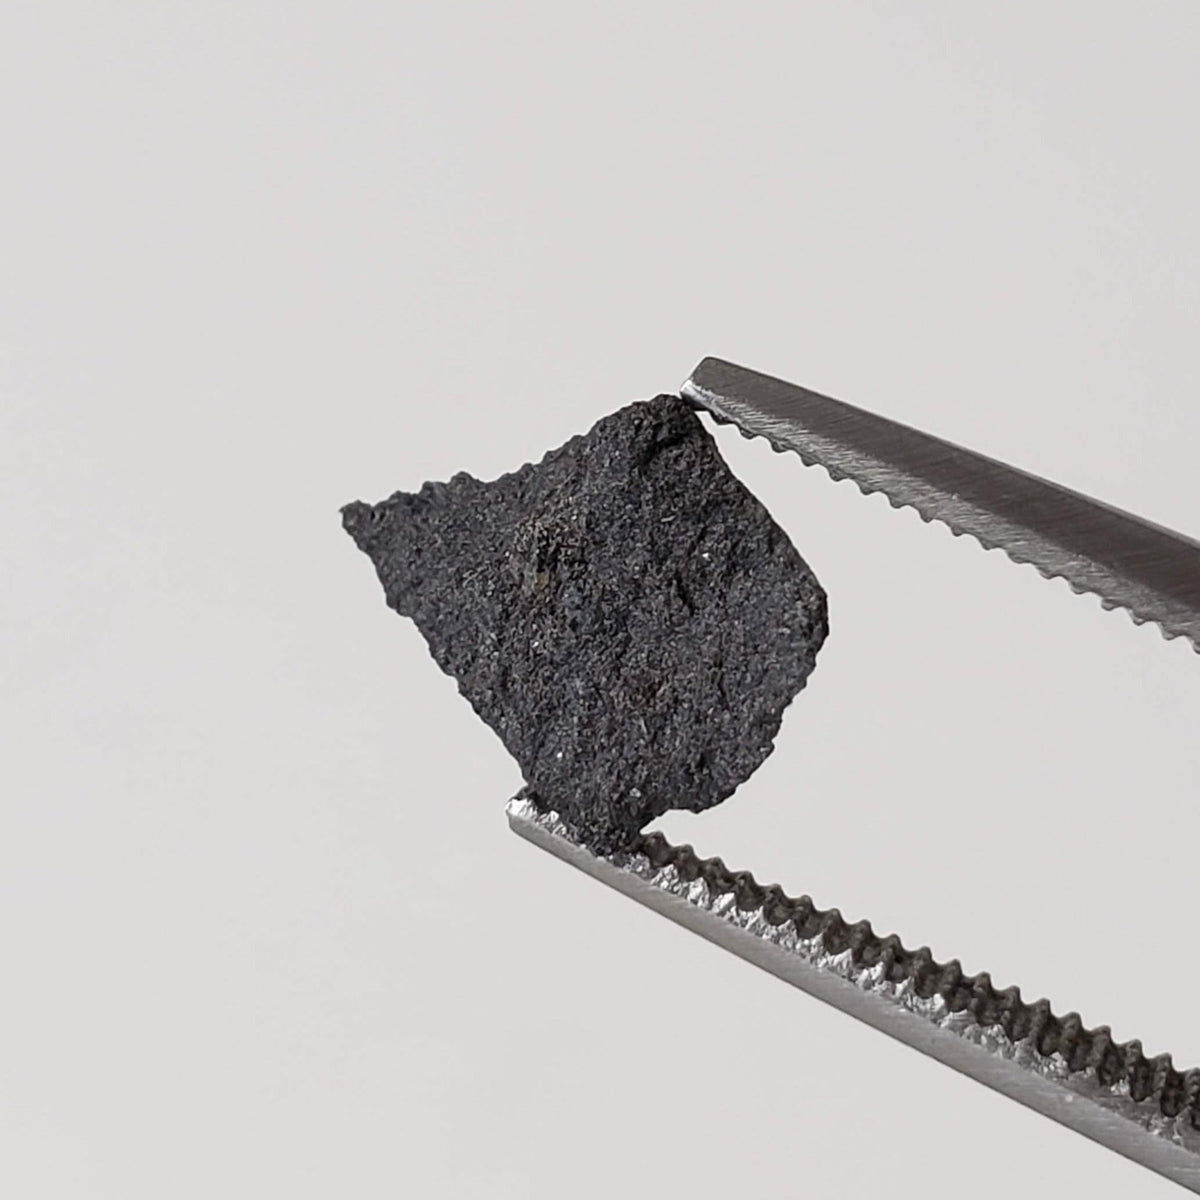 Abee Meteorite | 124 mg | Fragment | Rare Enstatite | EH4 Class | Observed Fall 1952 Canada | Canagem.com